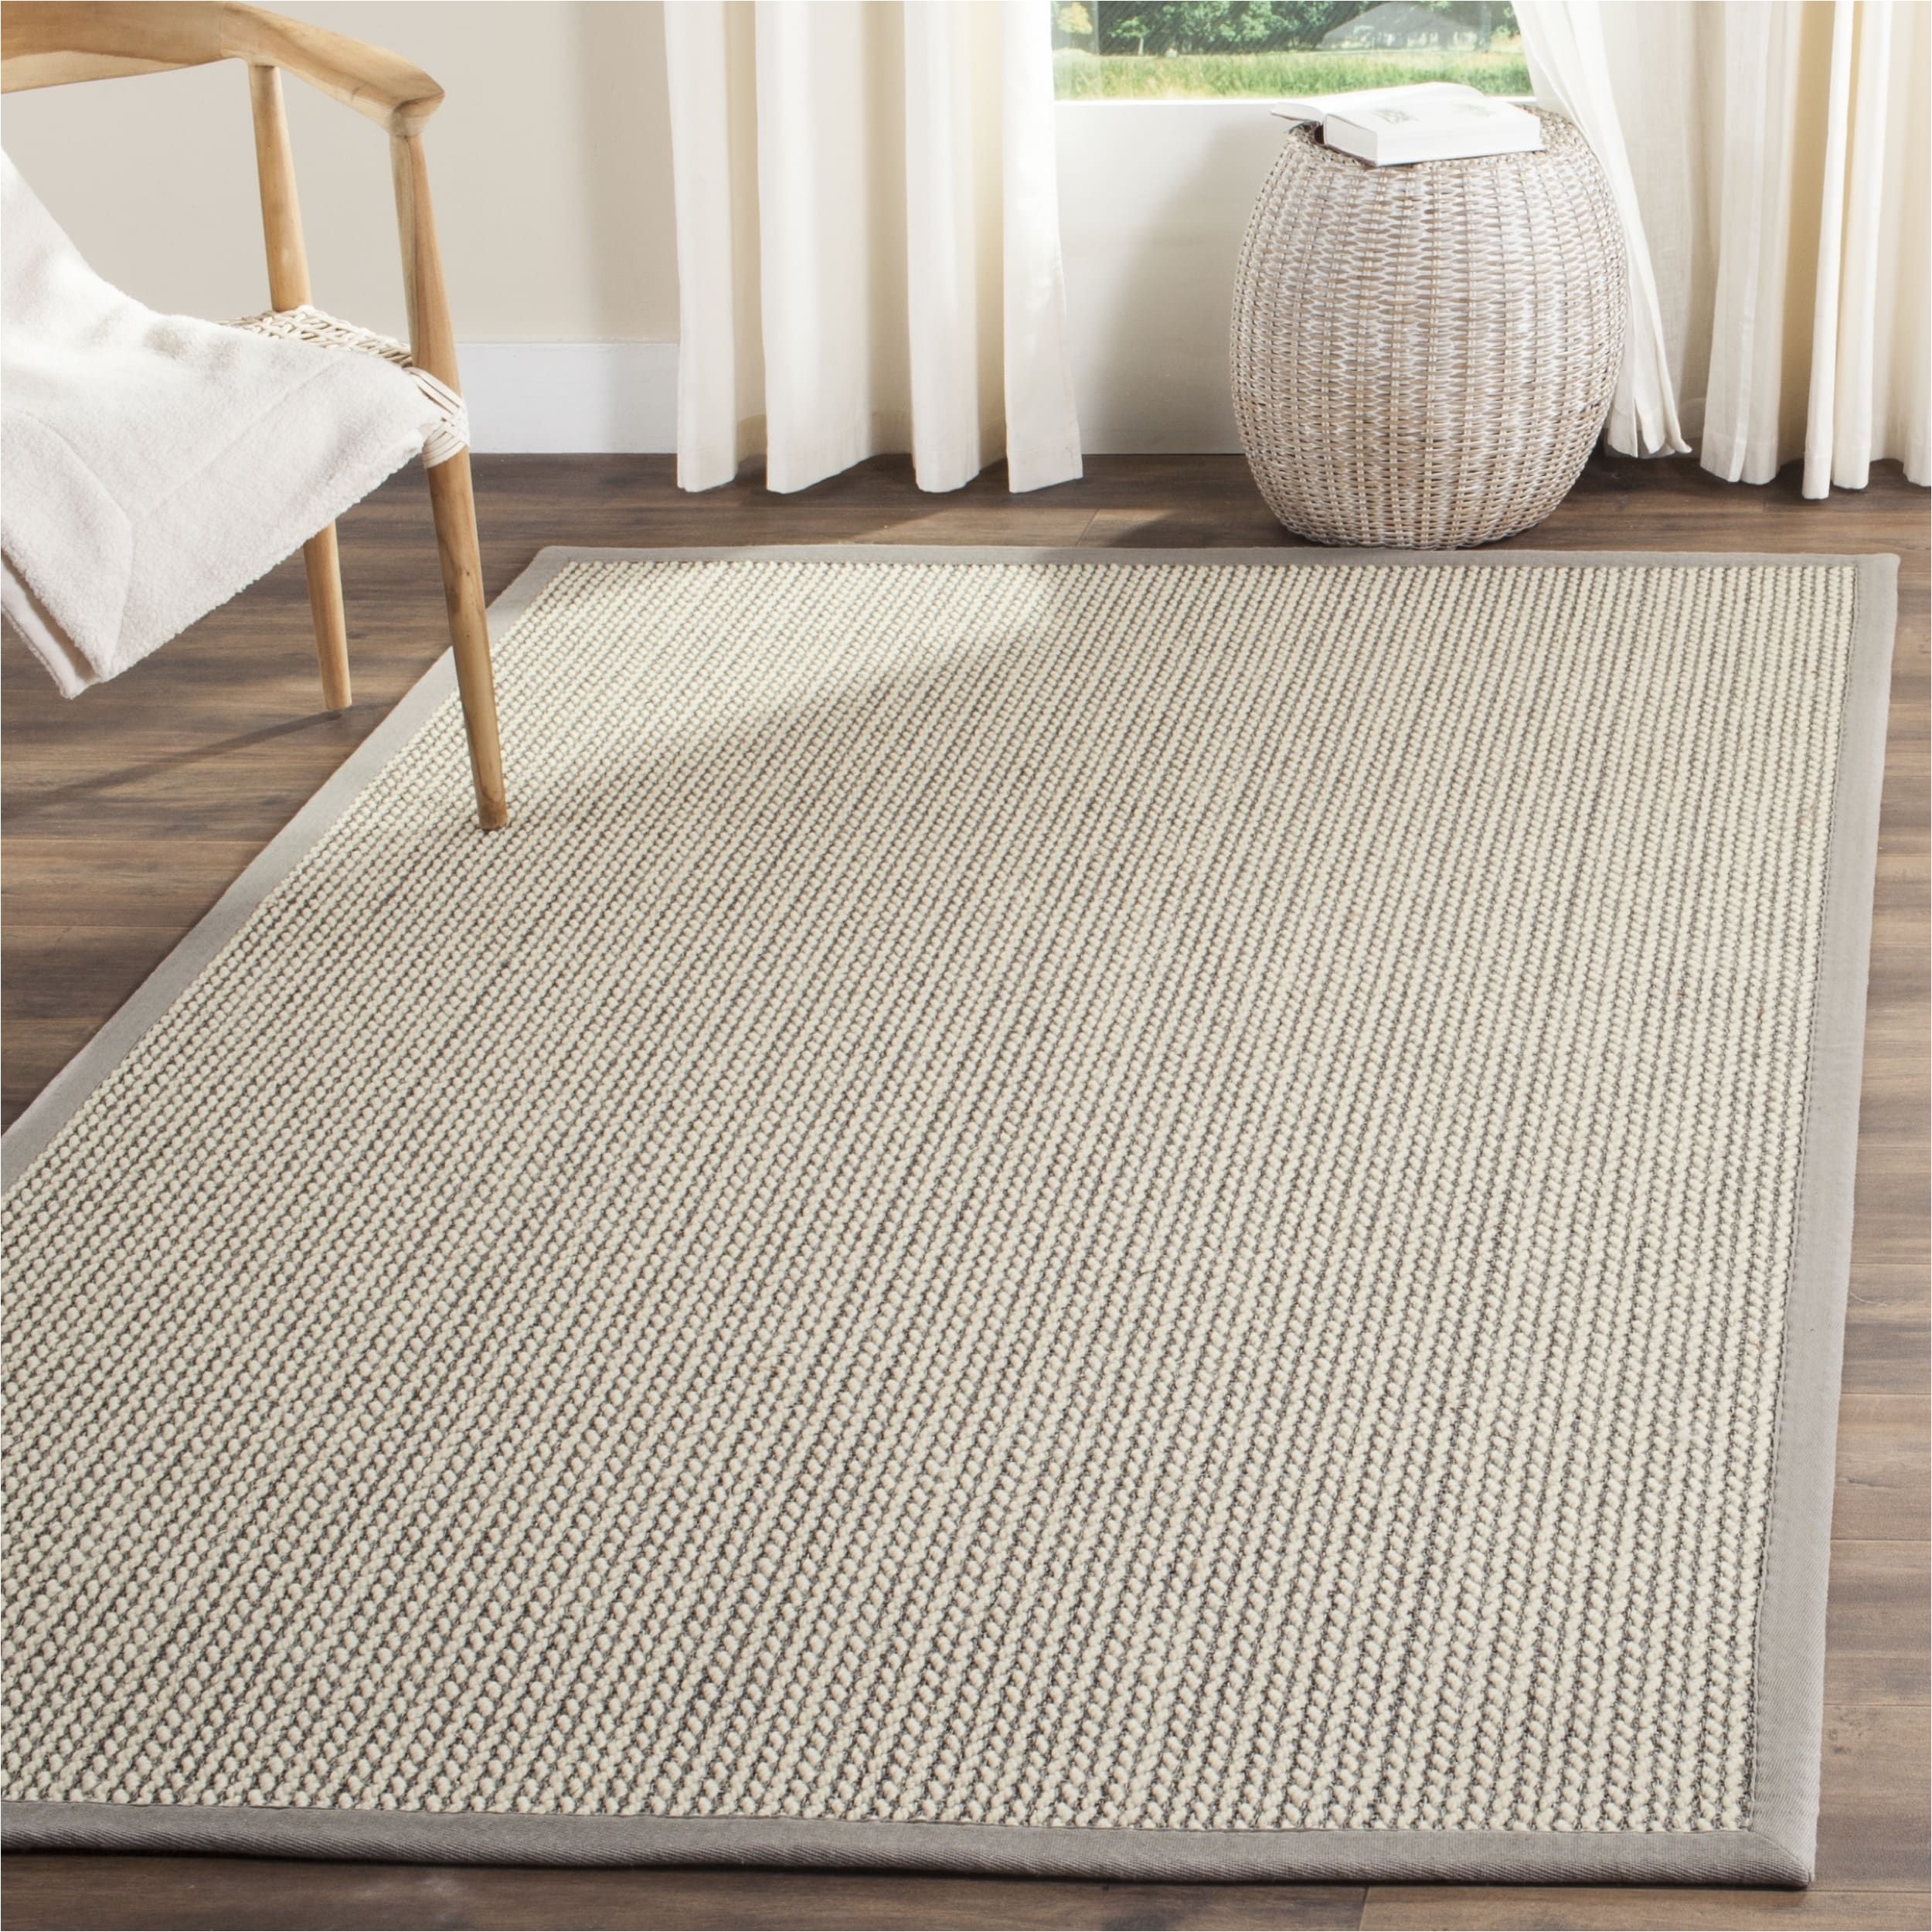 safavieh casual natural fiber handmade grey sisal rug 6 x 9 overstock com shopping the best deals on 5x8 6x9 rugs